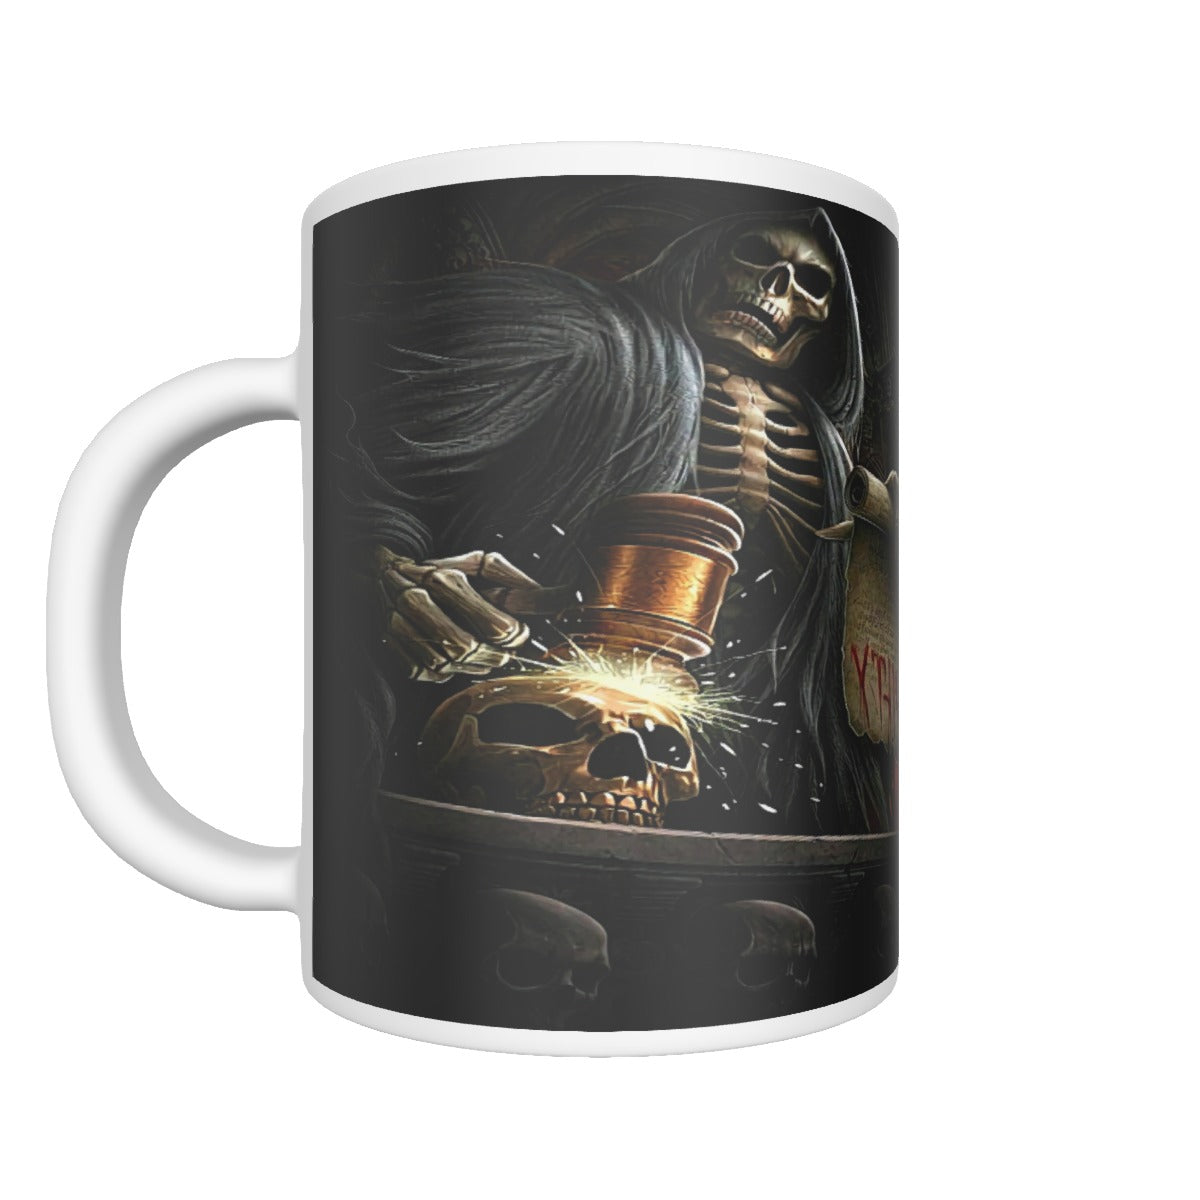 Grim reaper gothic ceramics mug, Halloween horror skull mug tumbler